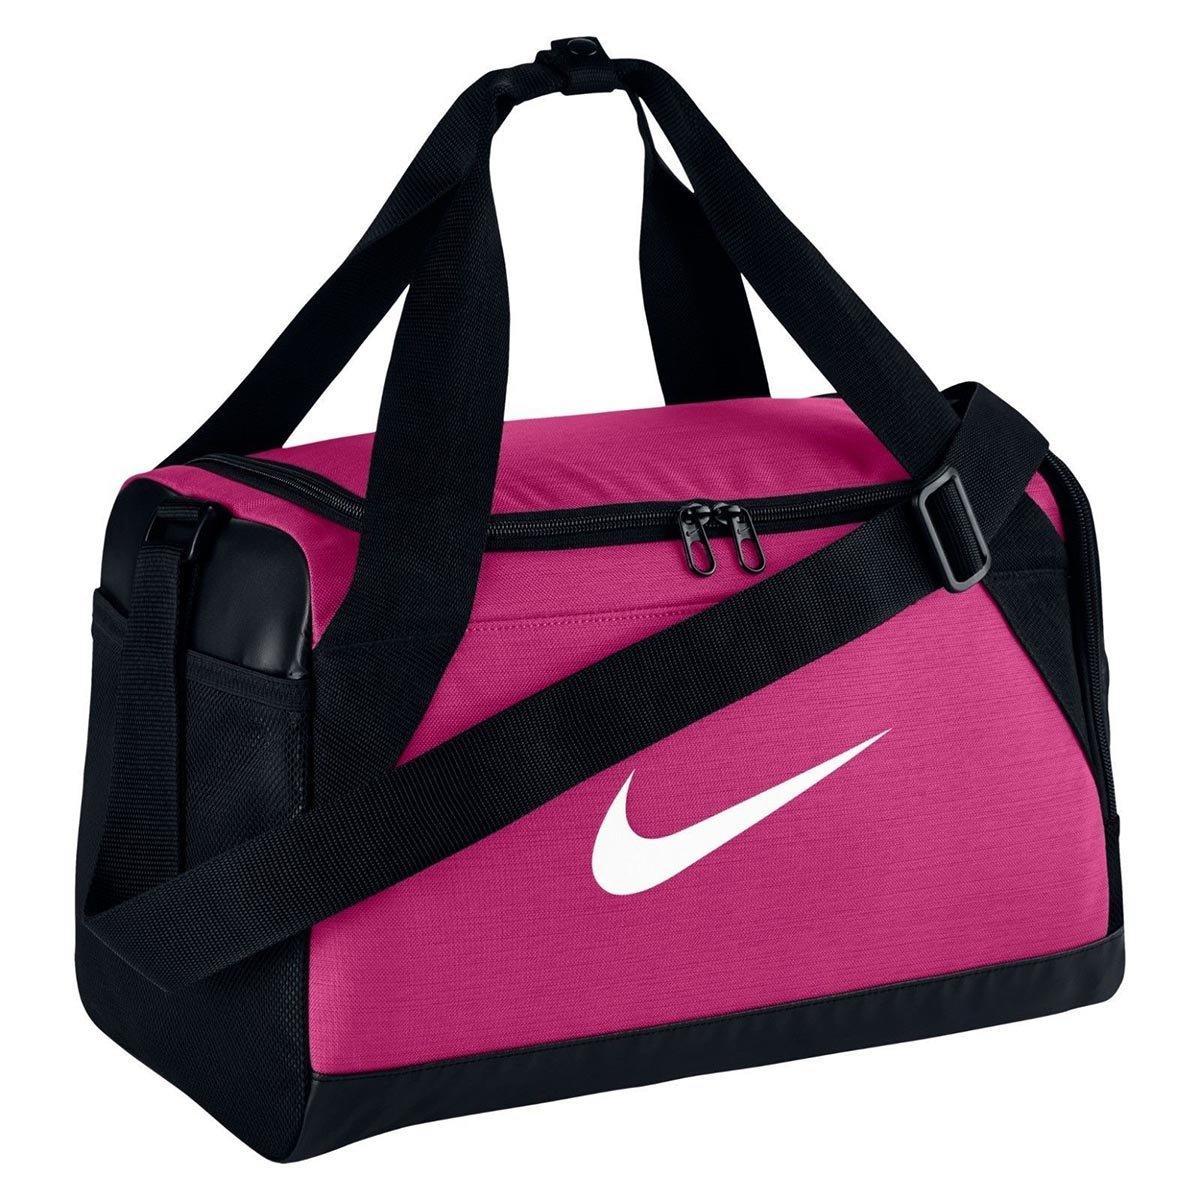 Buy Nike Brasilia XS Duffle Bag (Pink/Black) Online at Lowest Price in ...